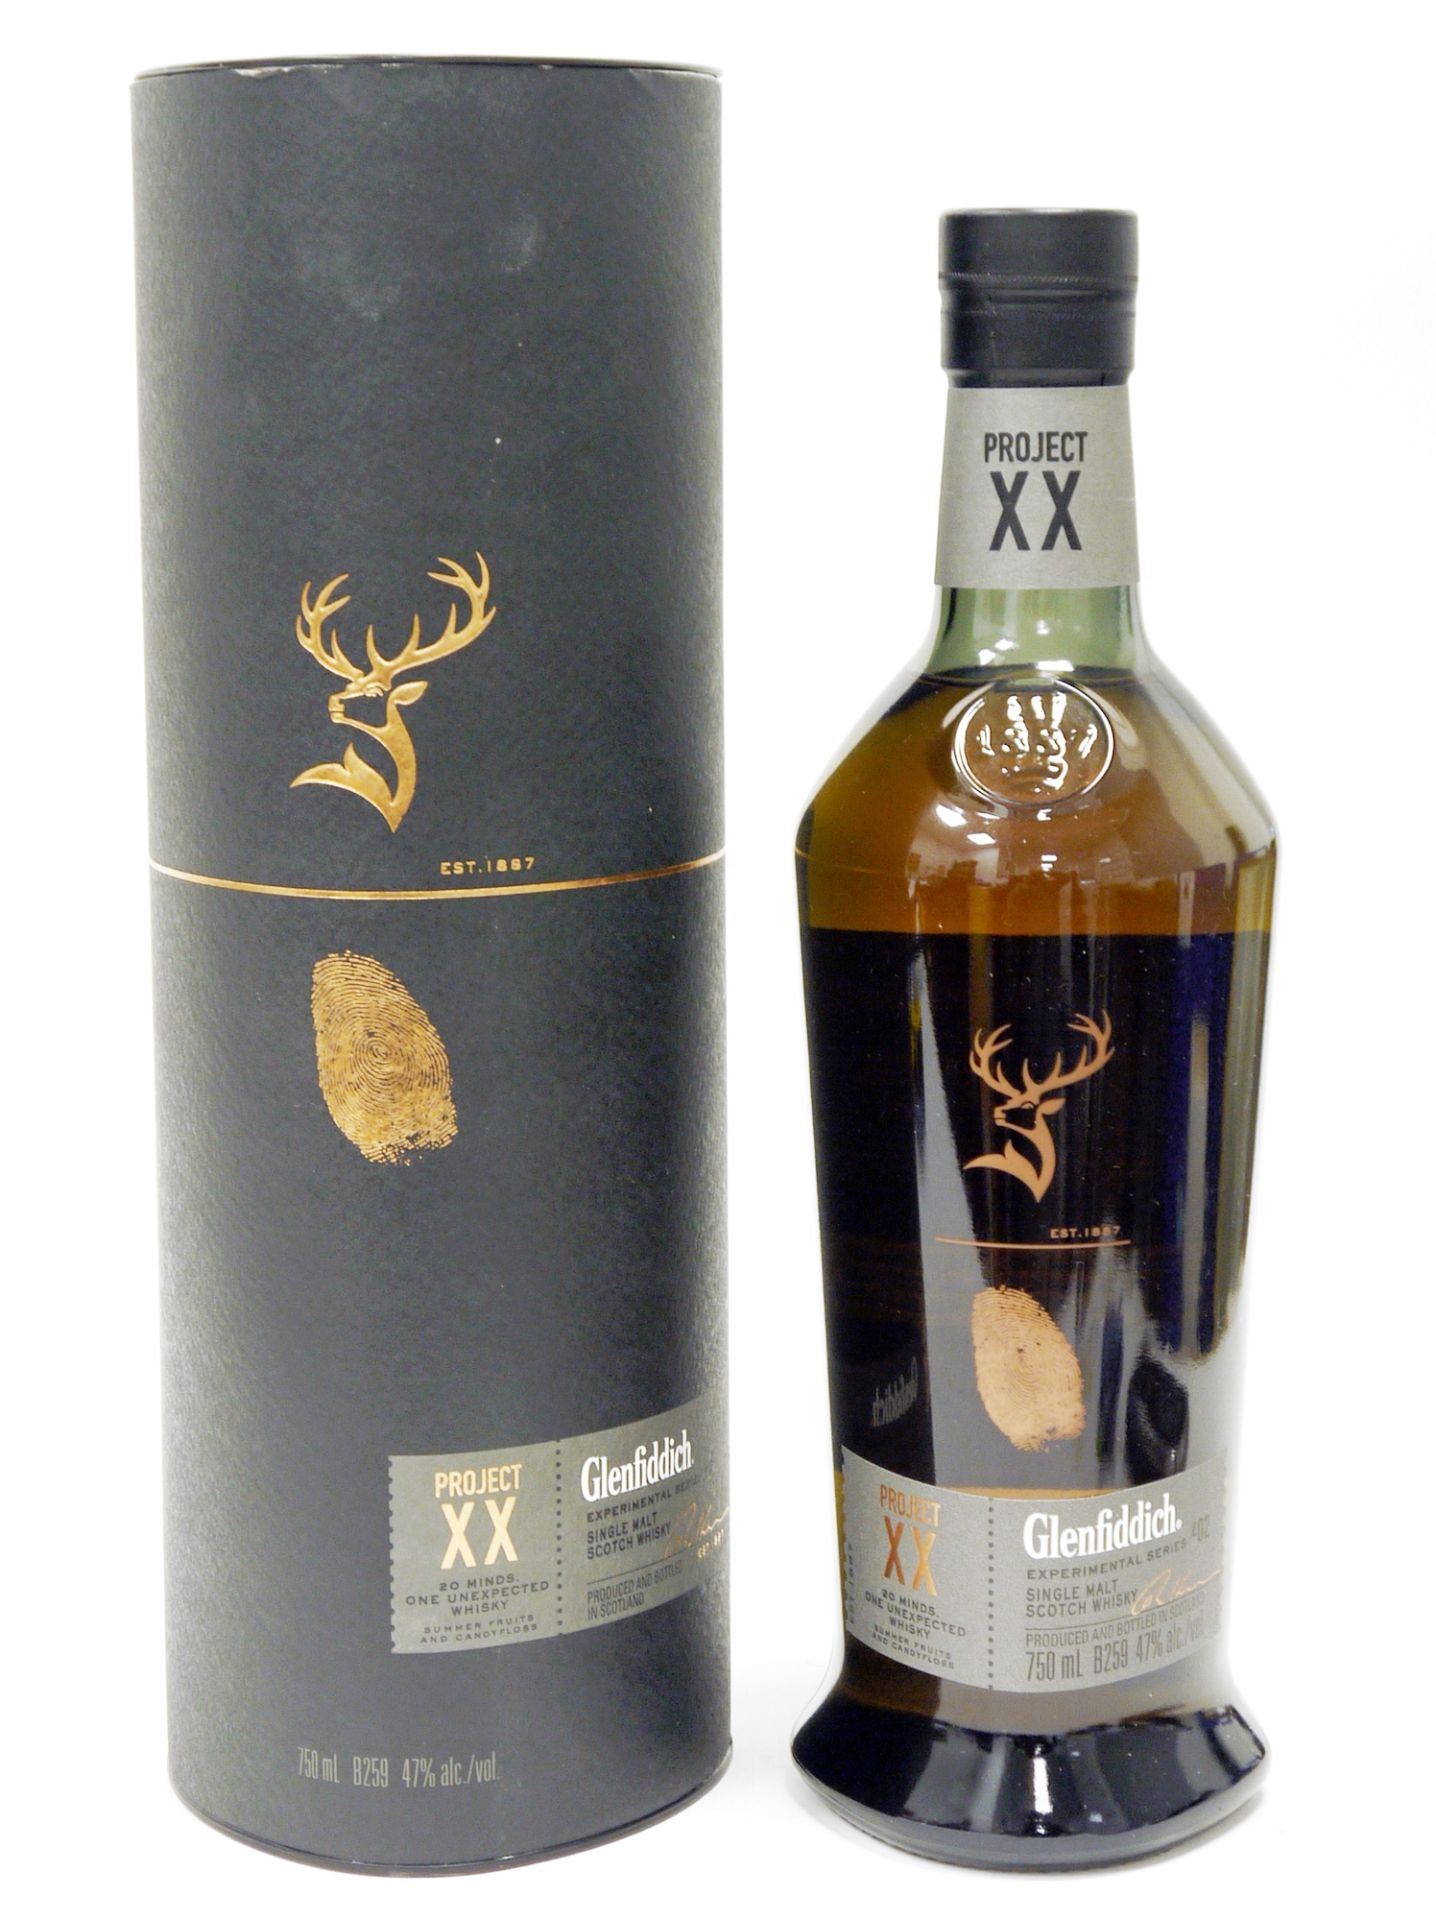 Glenfiddich Project XX single malt scotch malt whisky, experimental series 02, 750ml, 47% vol, in